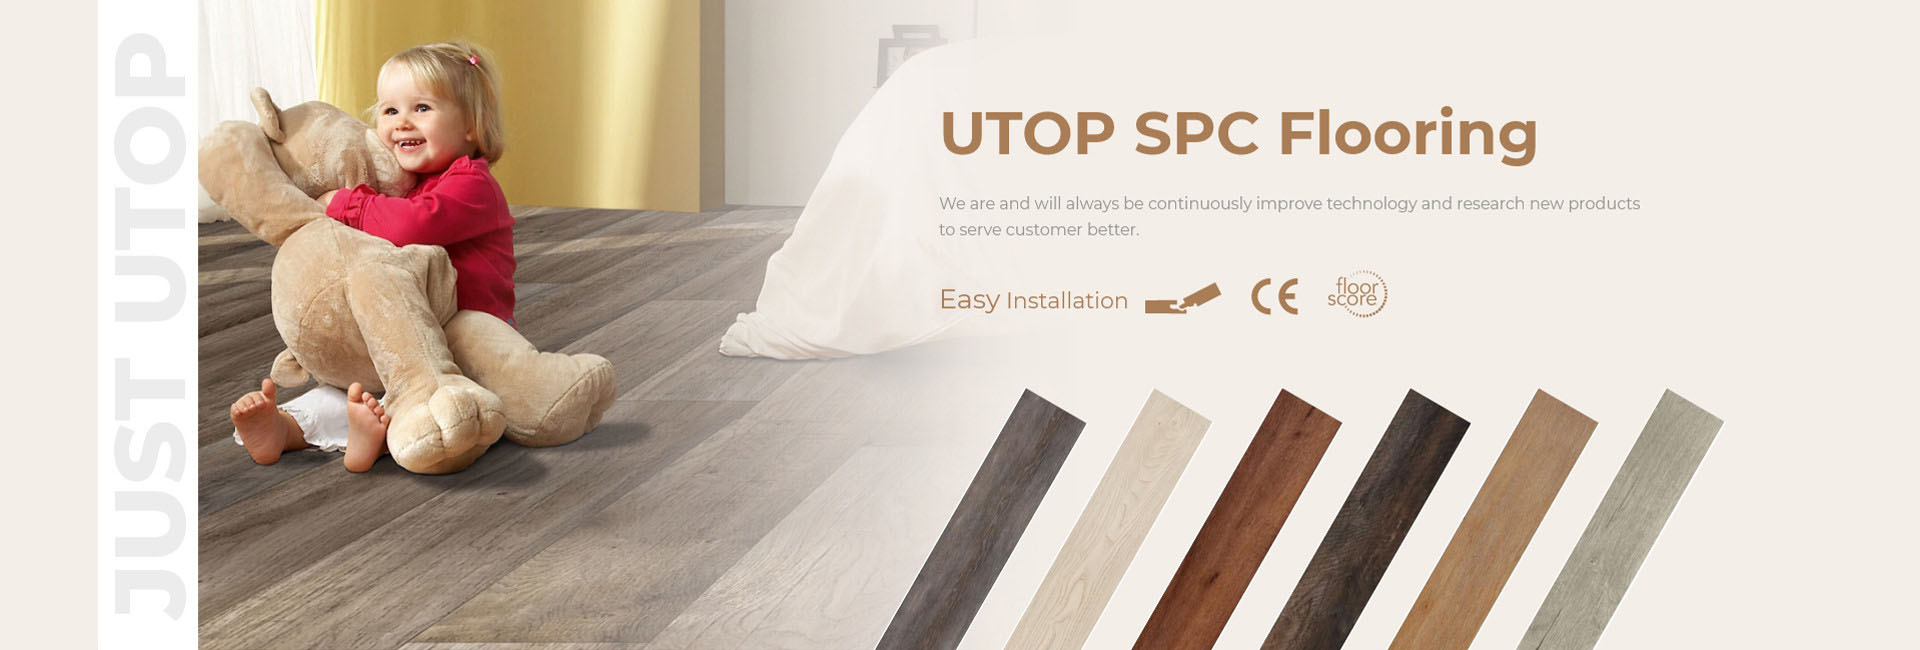 spc flooring natural texture